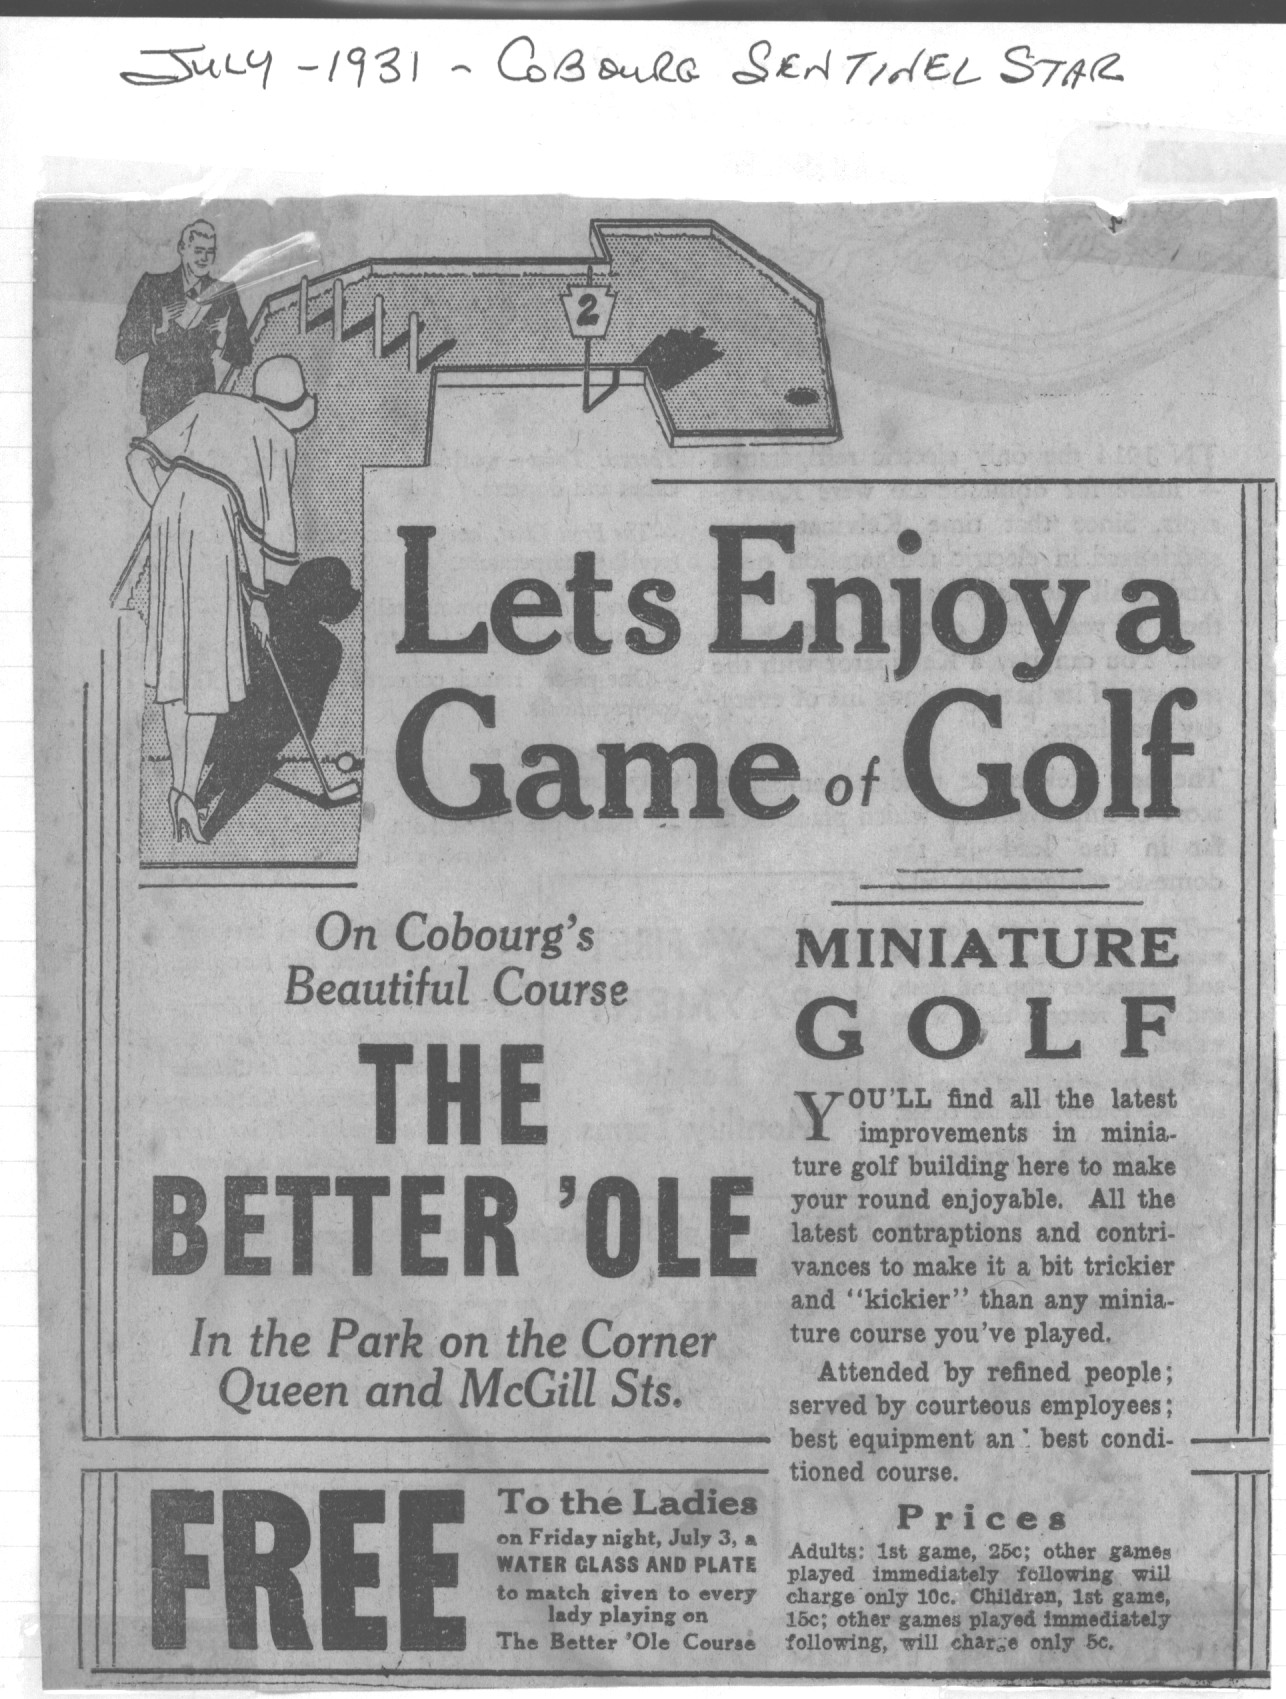 1931-07-02 Golf -Miniature Golf ad